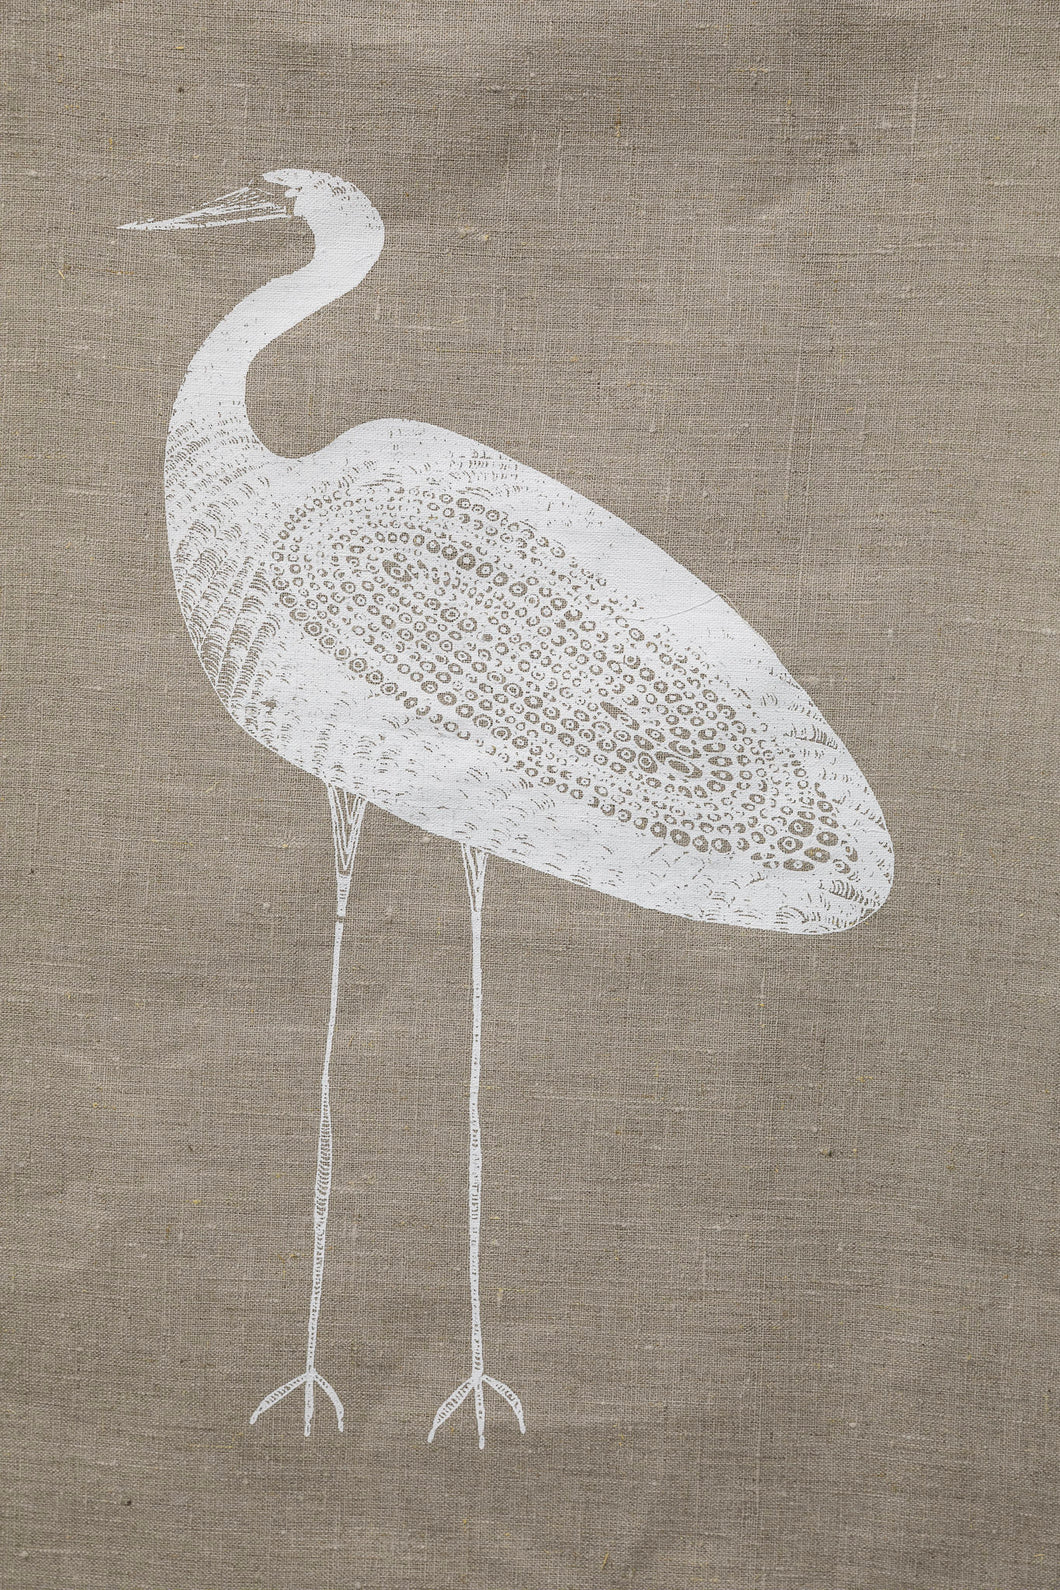 Garagun (White Heron) - Handprinted Flax Linen Tea Towel